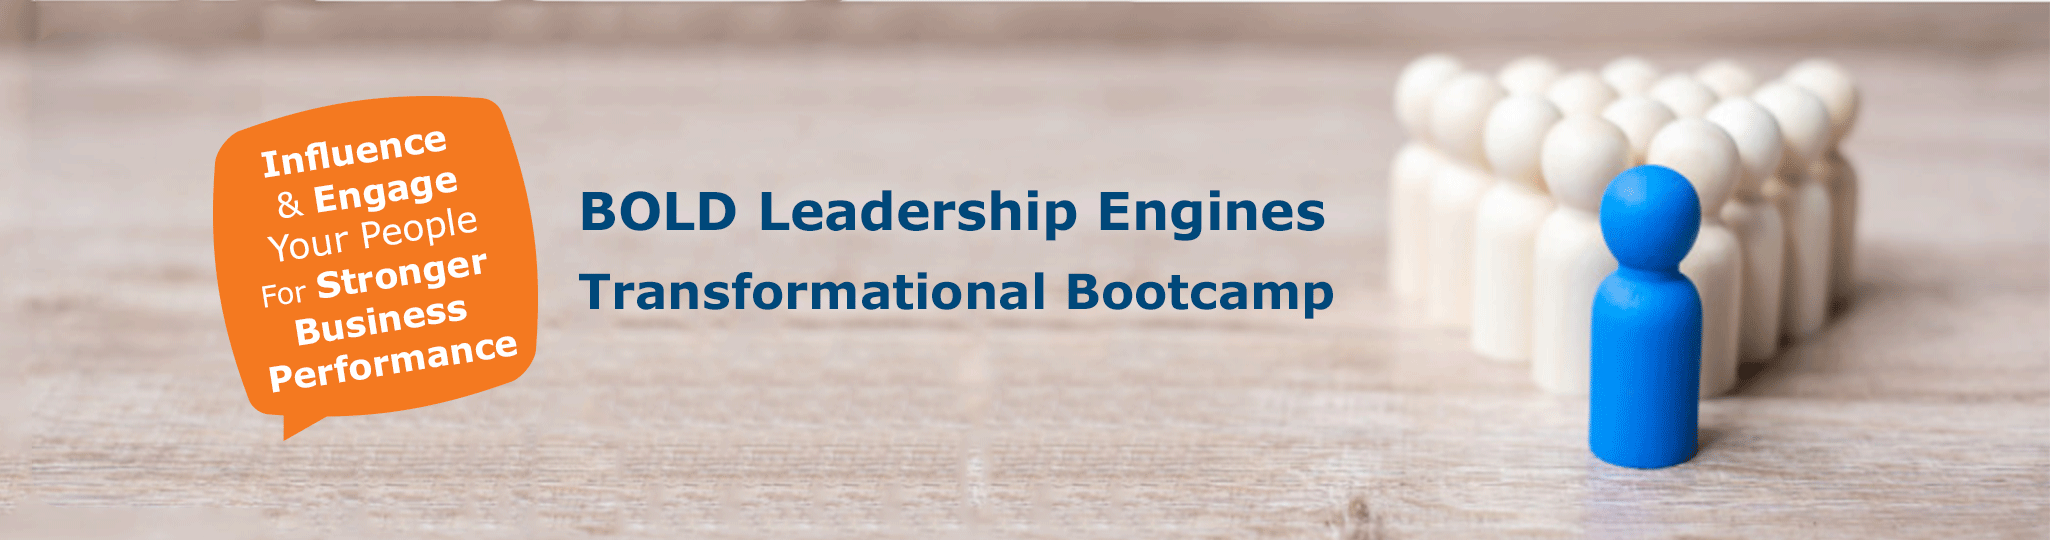 BOLD Leadership Engines Bootcamp